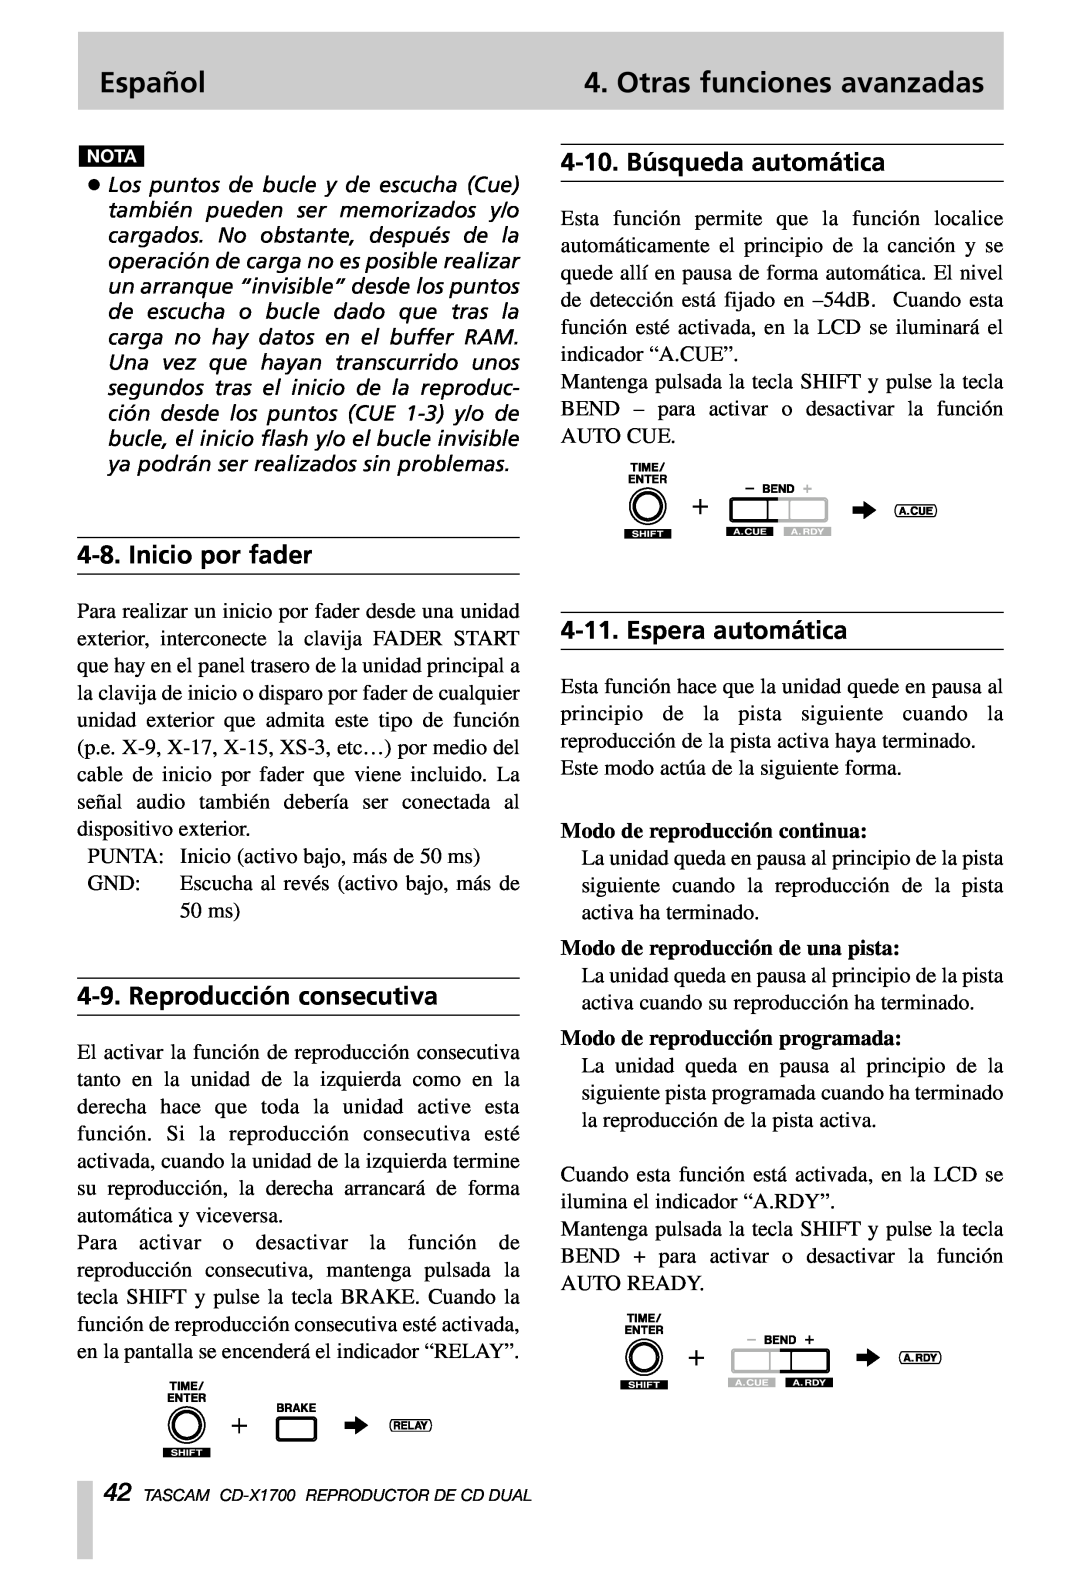 Tascam CD-X1700 4-10.Búsqueda automática, Inicio por fader, Reproducción consecutiva, Espera automática, Español 